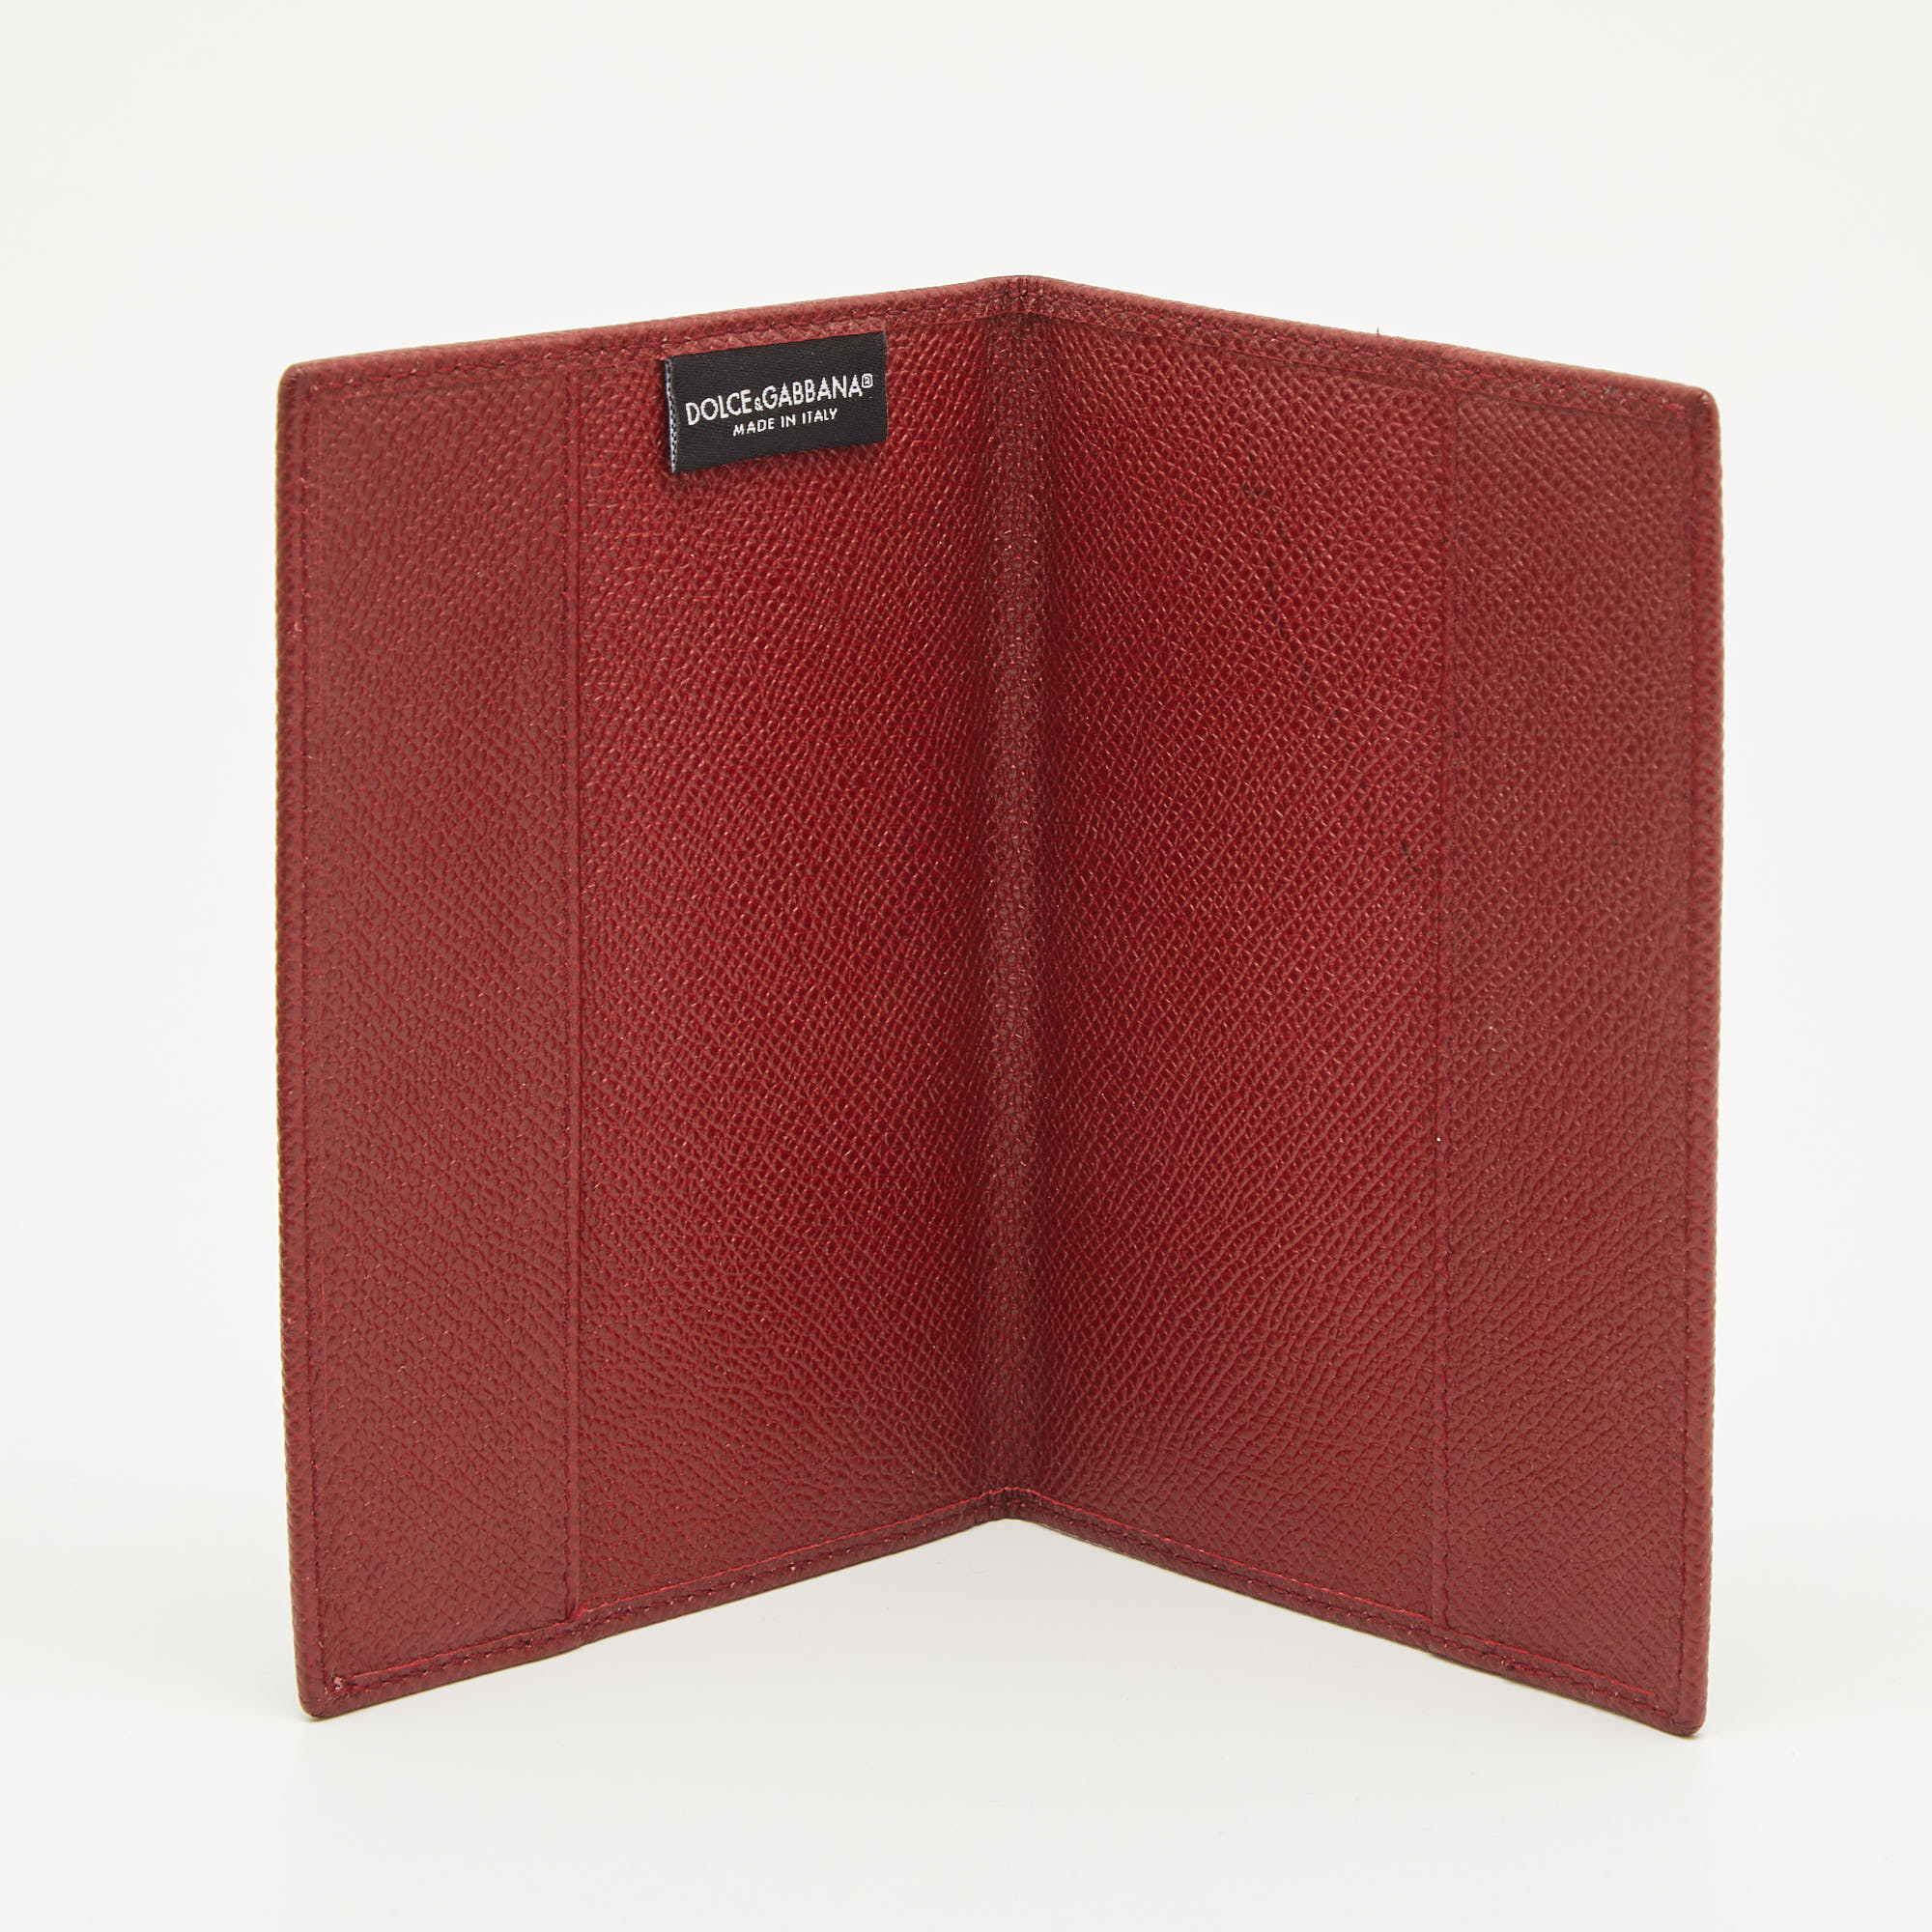 

Dolce & Gabbana Red Leather Passport Holder